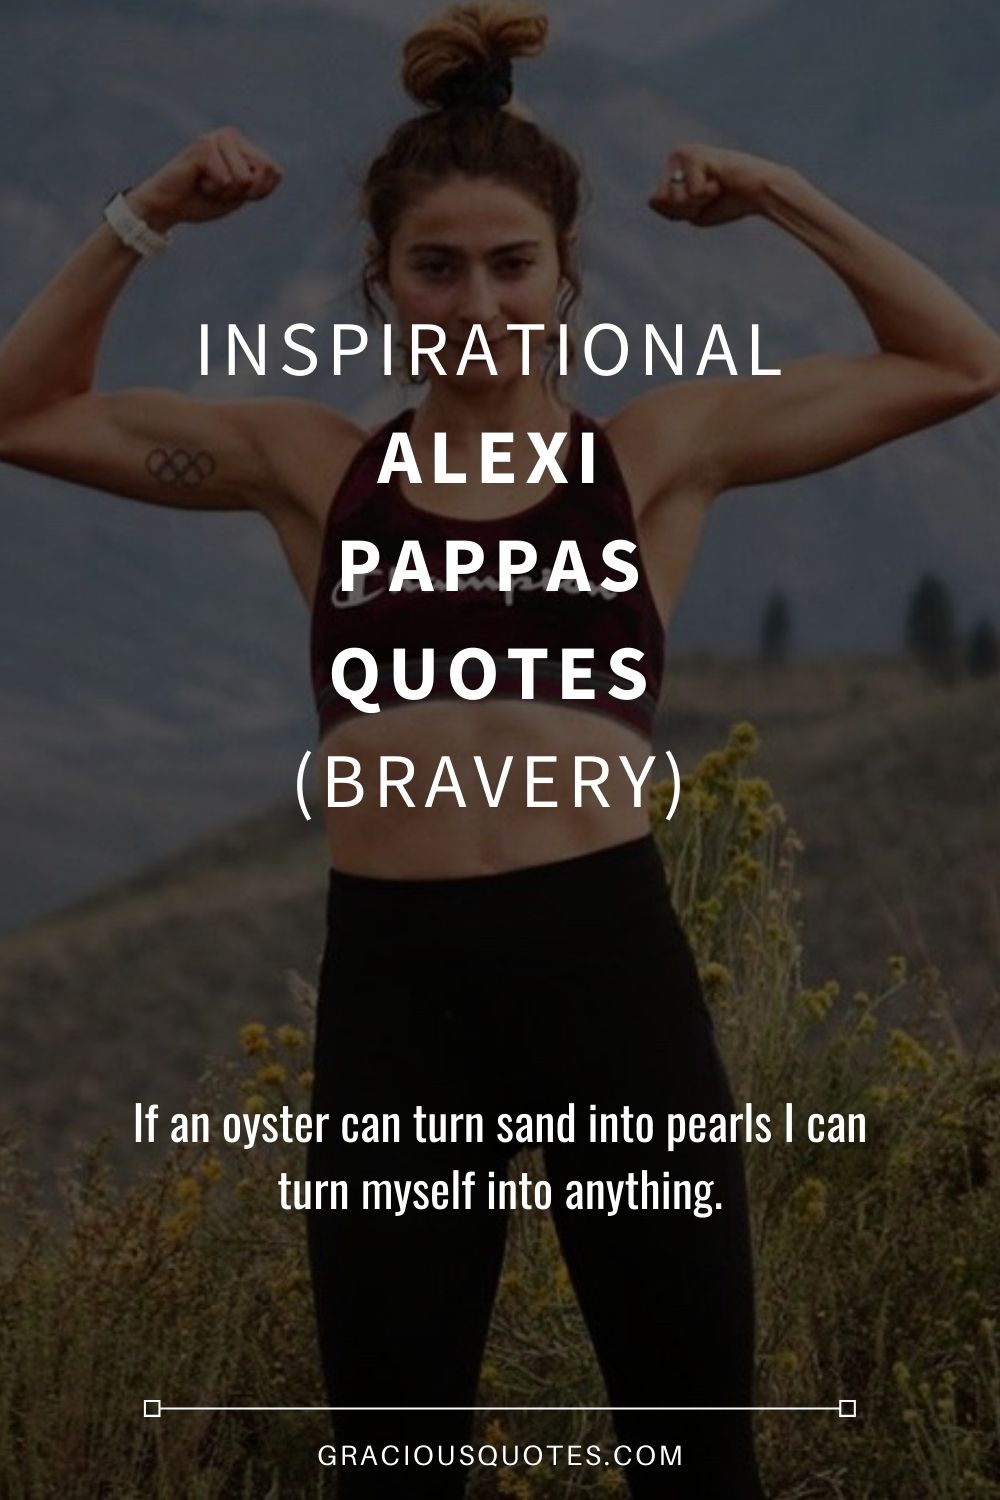 Inspirational Alexi Pappas Quotes (BRAVERY) - Gracious Quotes